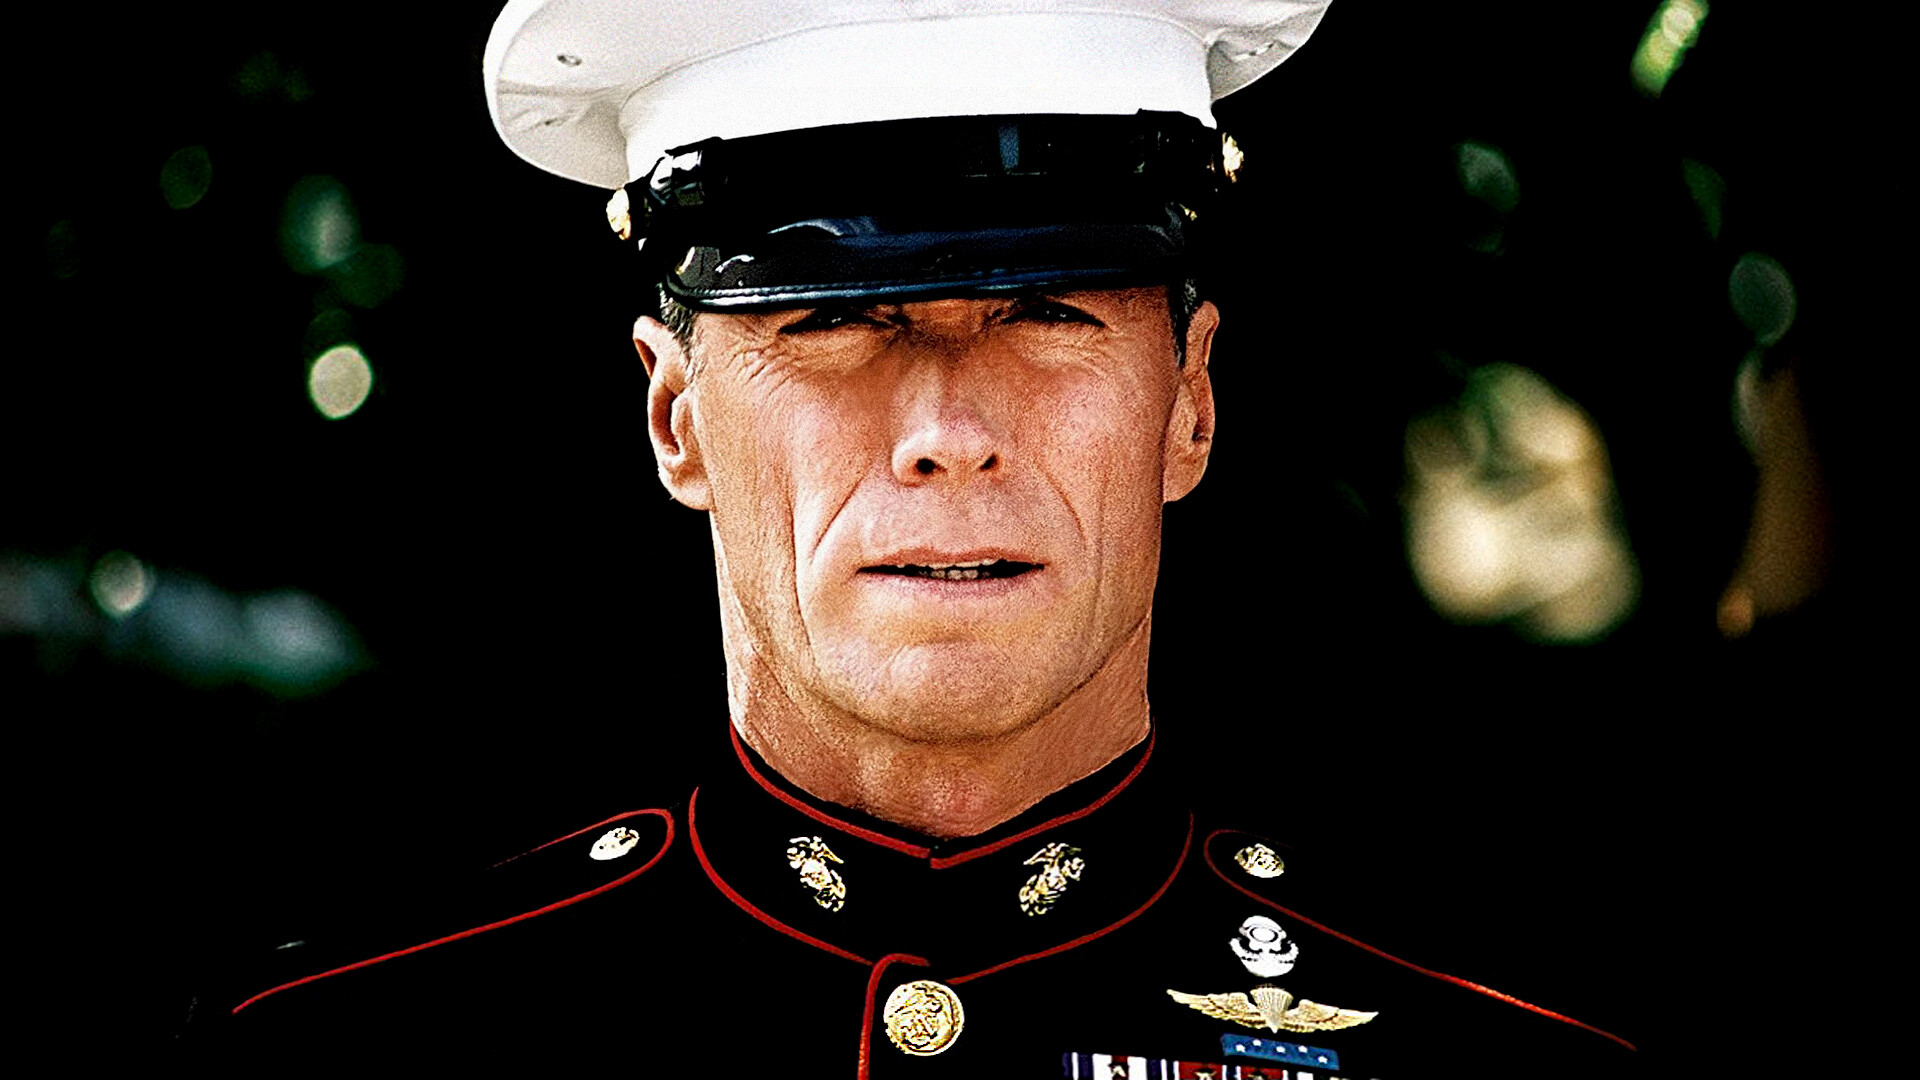 Clint Eastwood: Heartbreak Ridge, American War Film, The Battle of Heartbreak Ridge In The Korean War, The Film Also Co-Stars Marsha Mason, Everett McGill, And Mario Van Peebles. 1920x1080 Full HD Background.